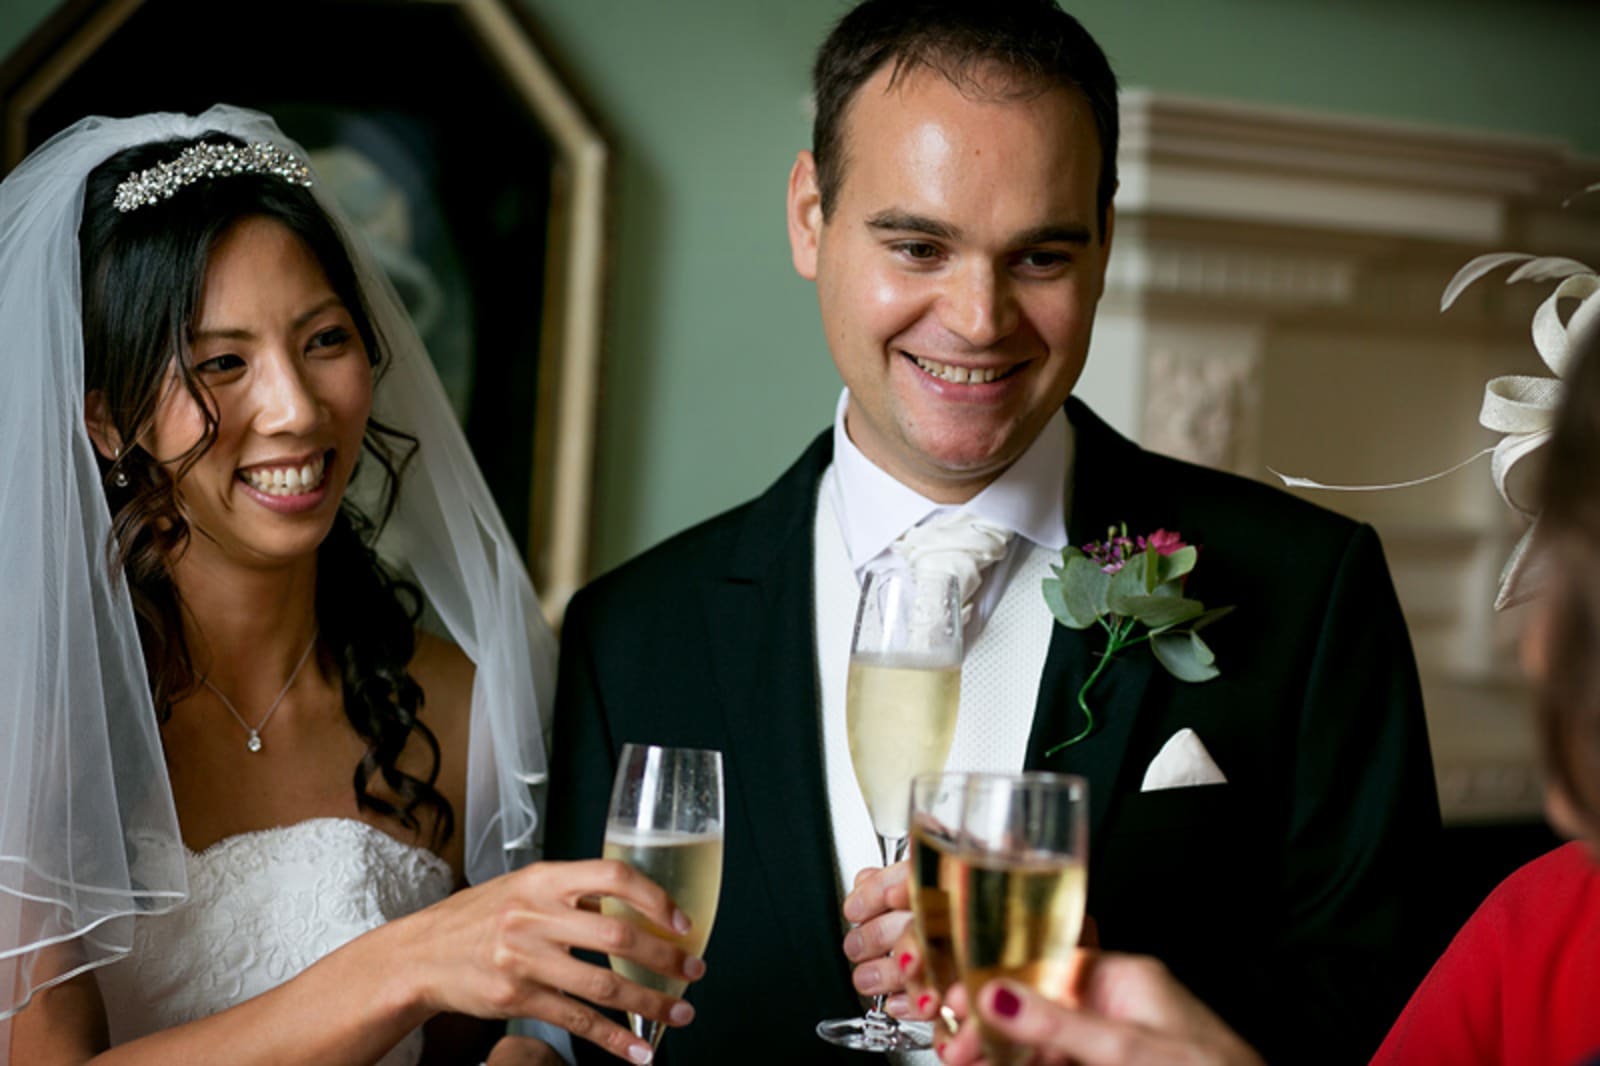 outh East | Oxfordshire | Banbury | Autumn | Classic | Purple |  | Country House | Real Wedding | Guy Hearn Photography #Bridebook #RealWedding #WeddingIdeas Bridebook.co.uk 